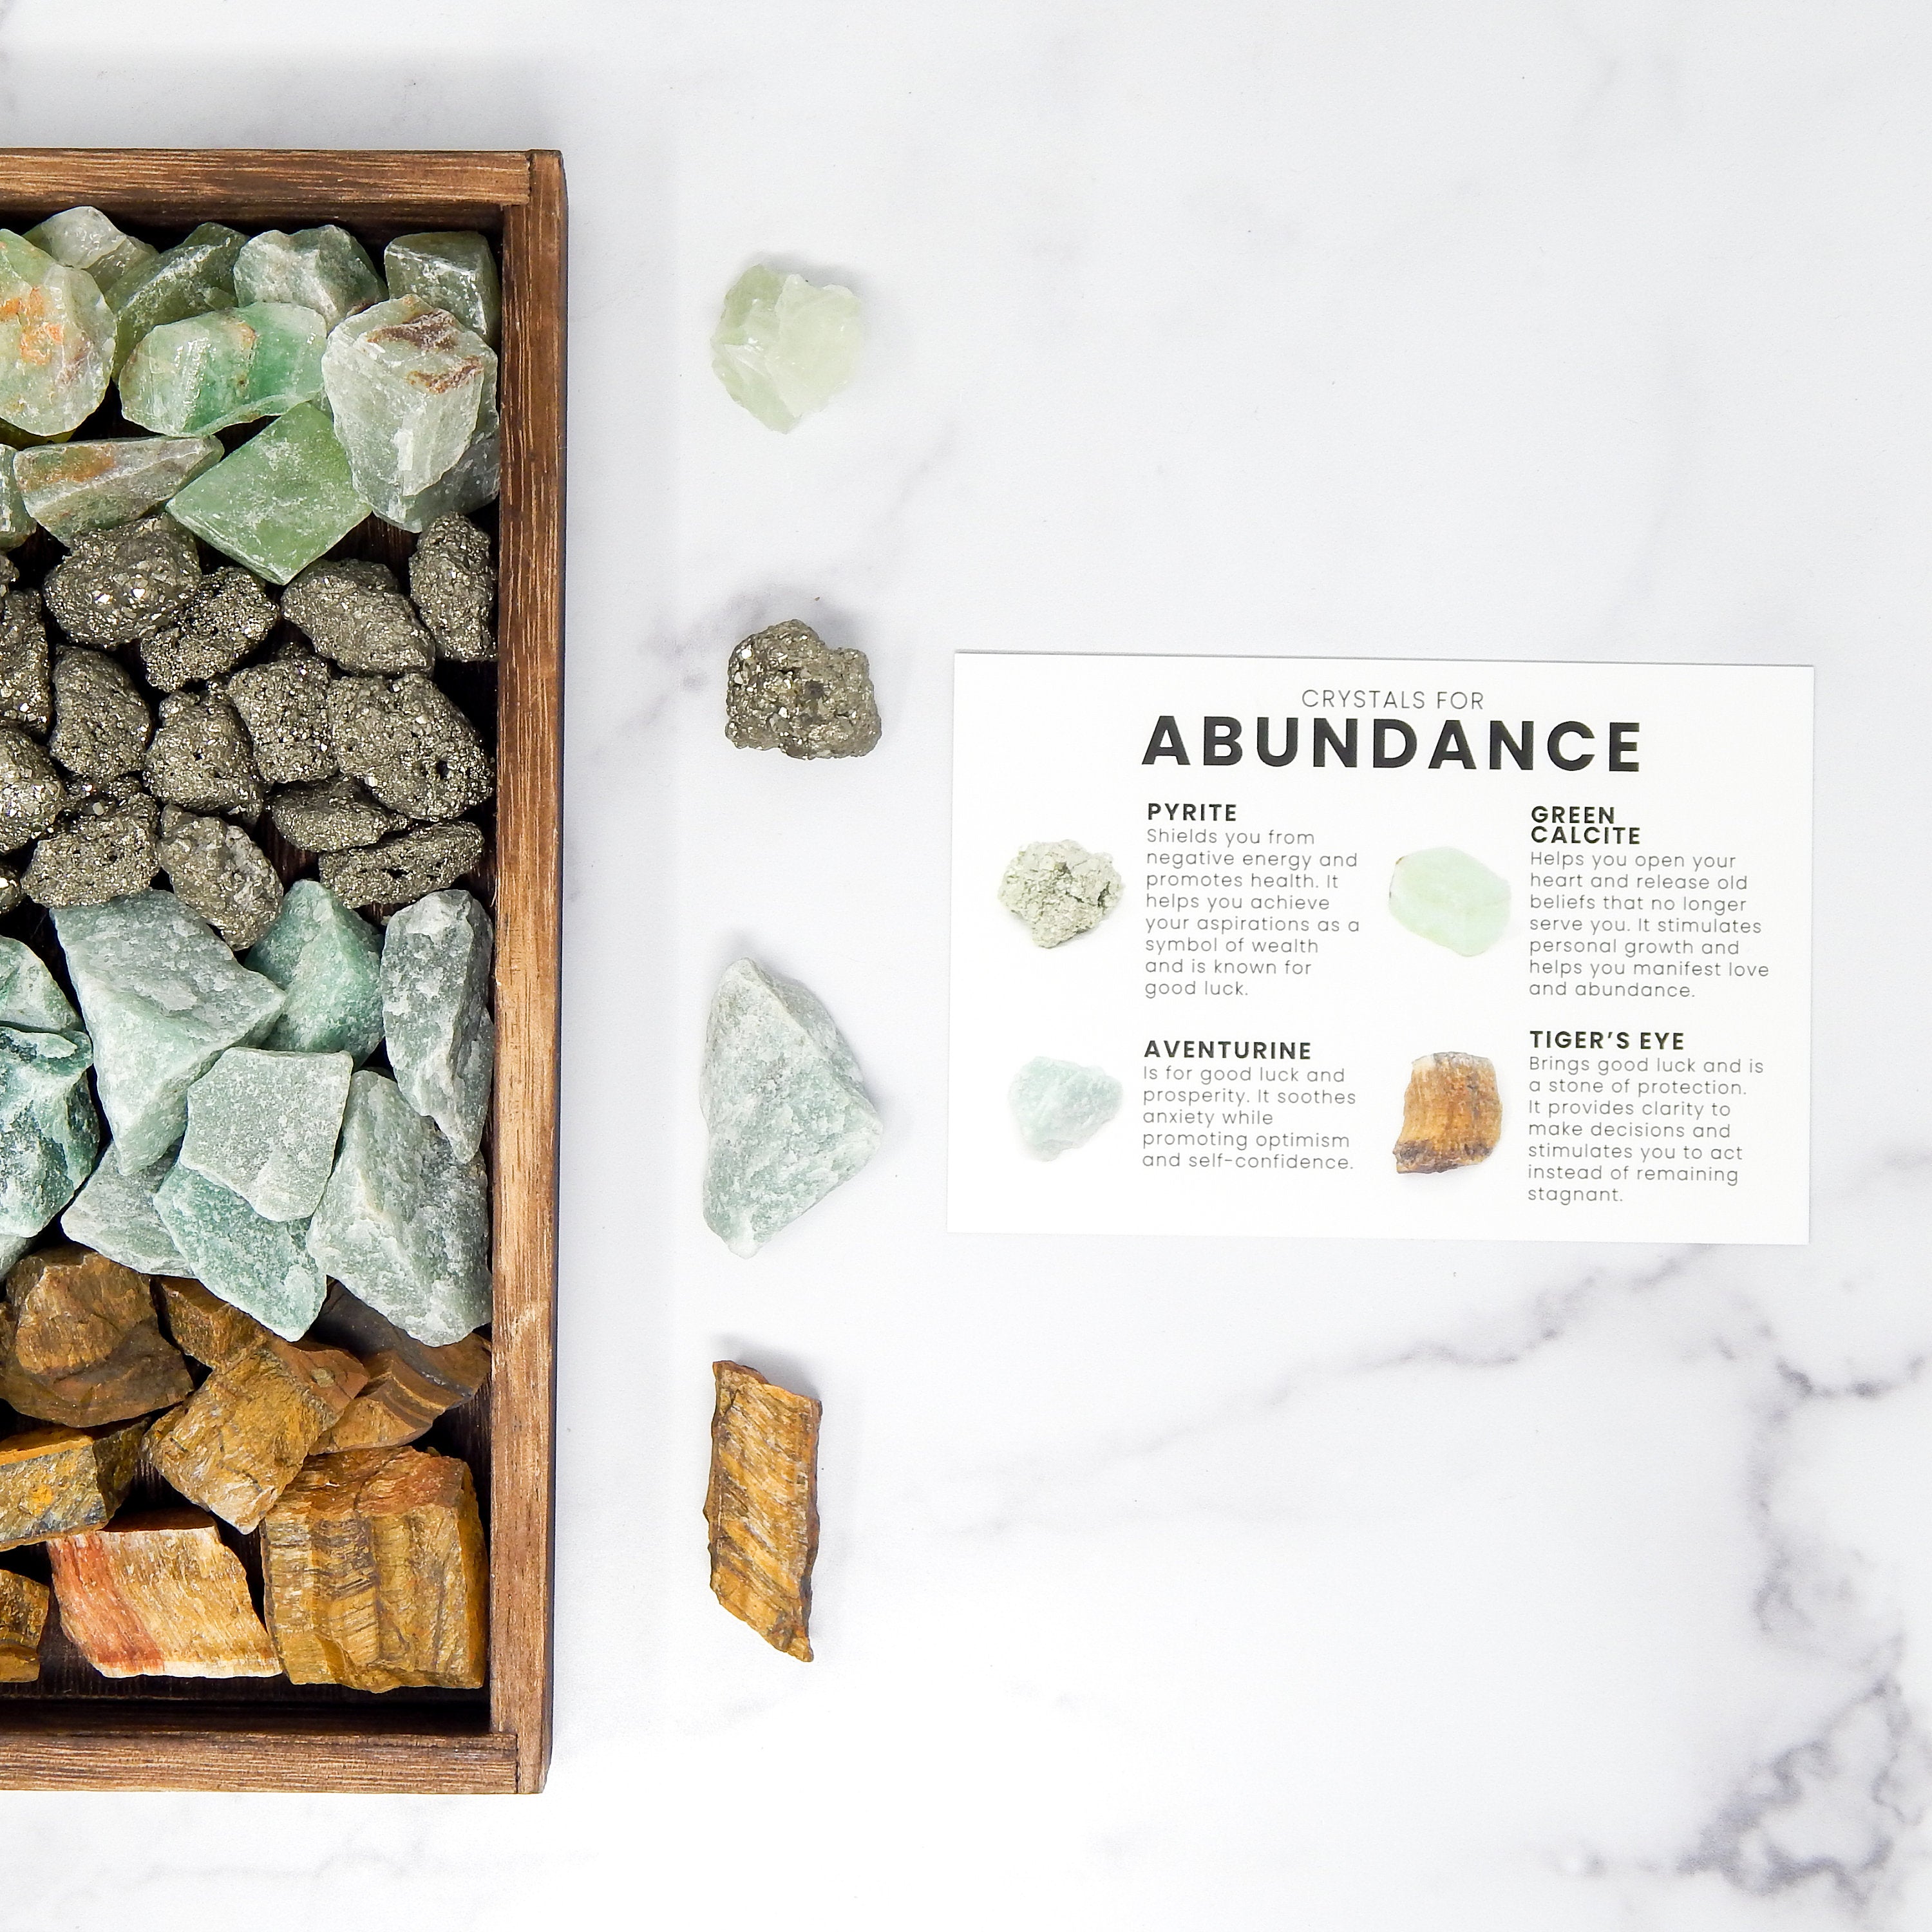 Crystals for Abundance